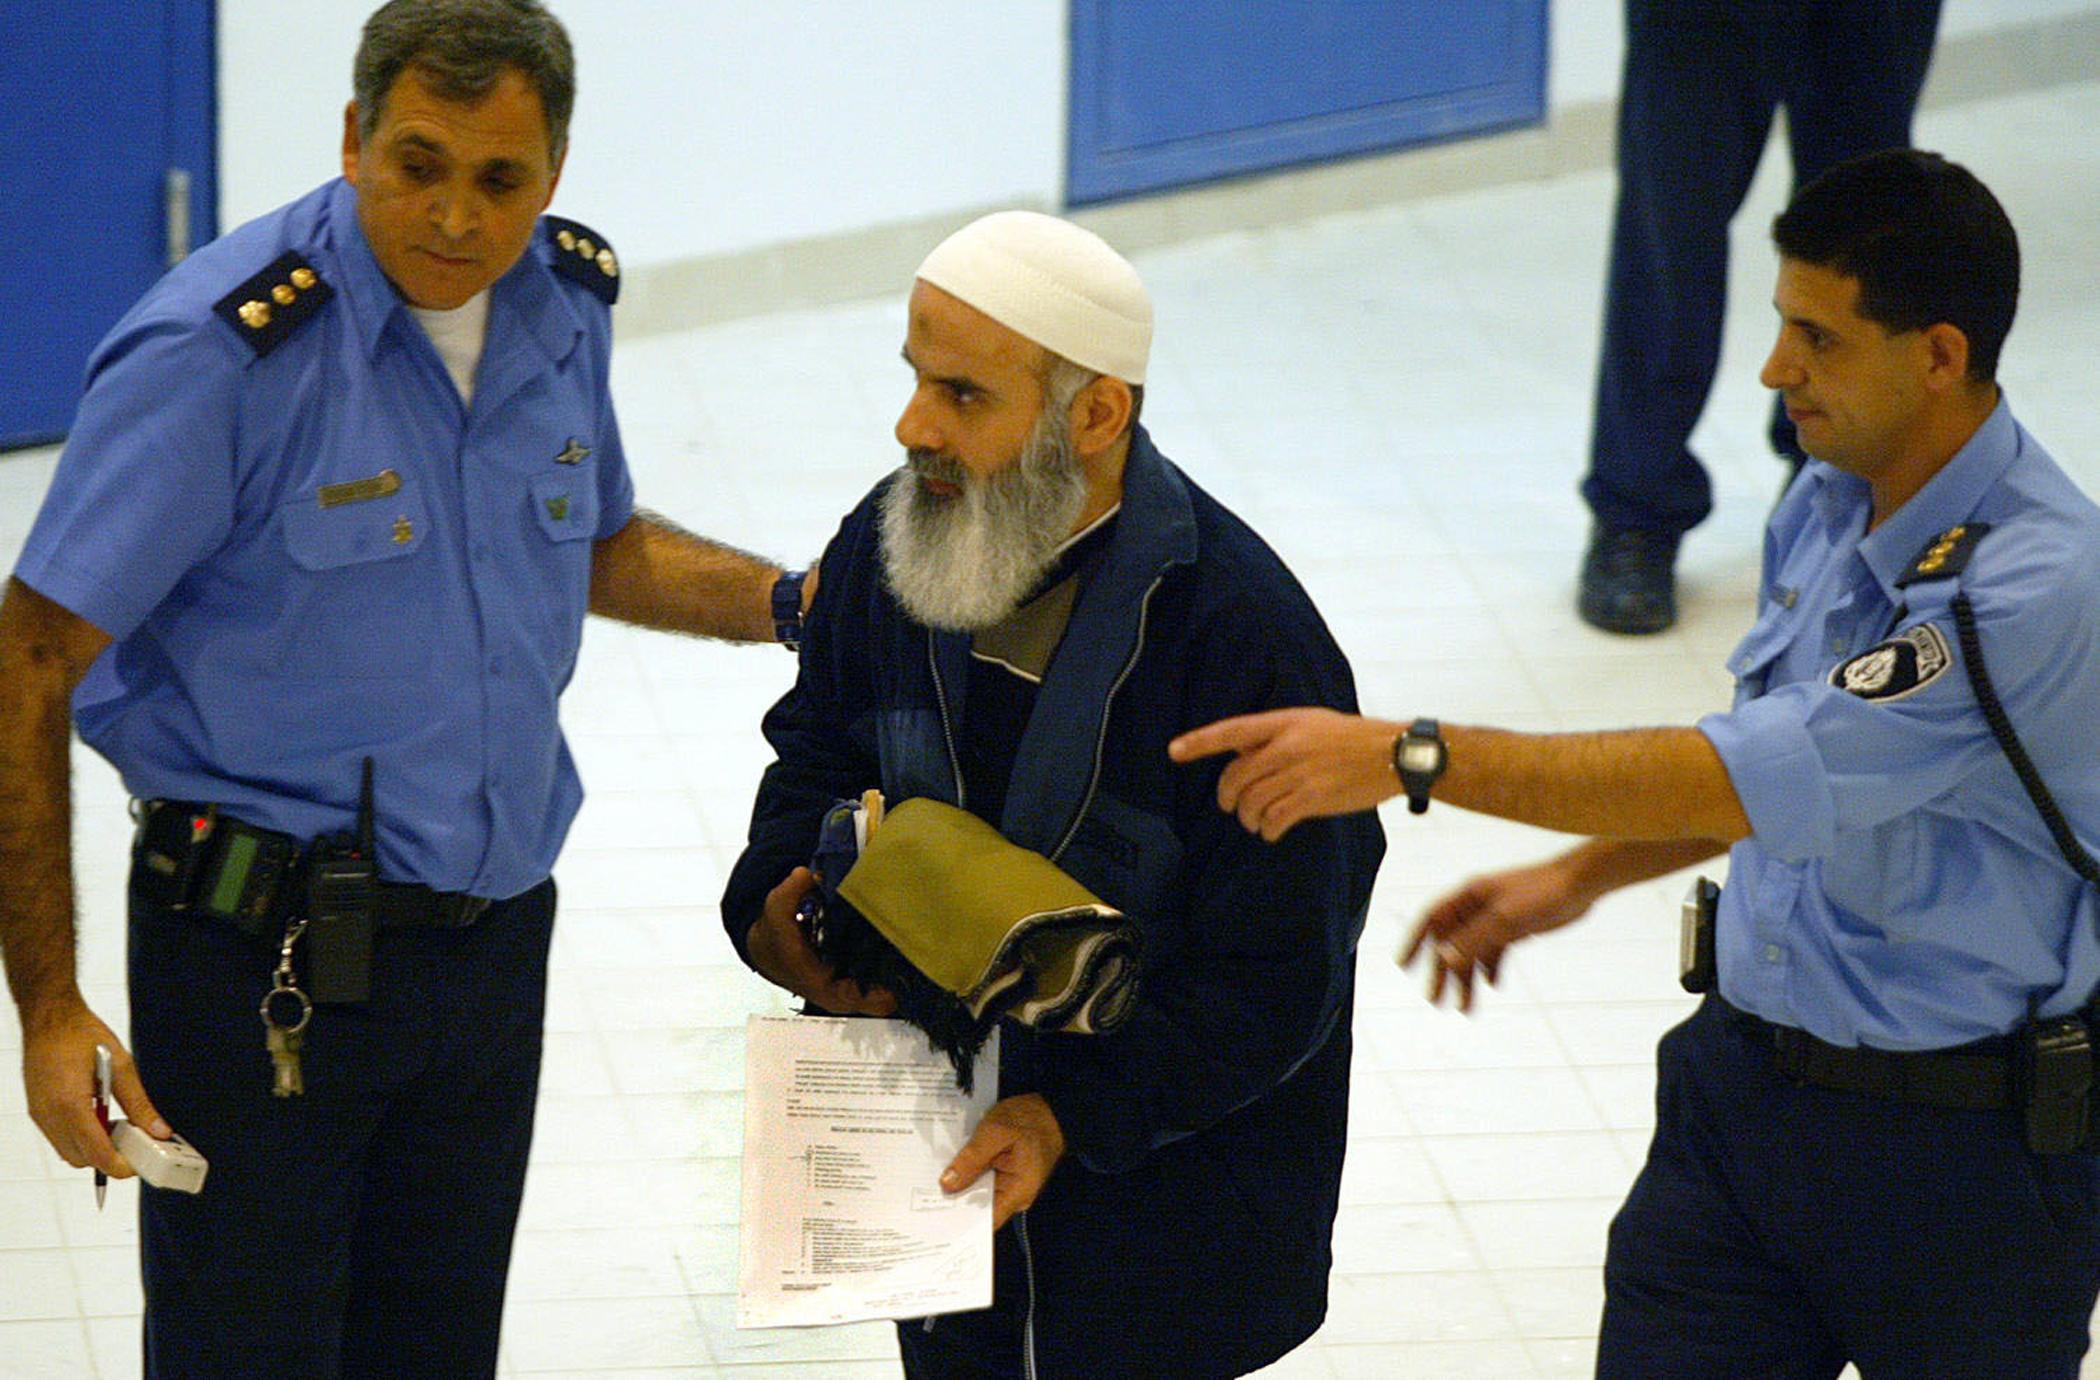 Airport security handling Muslim